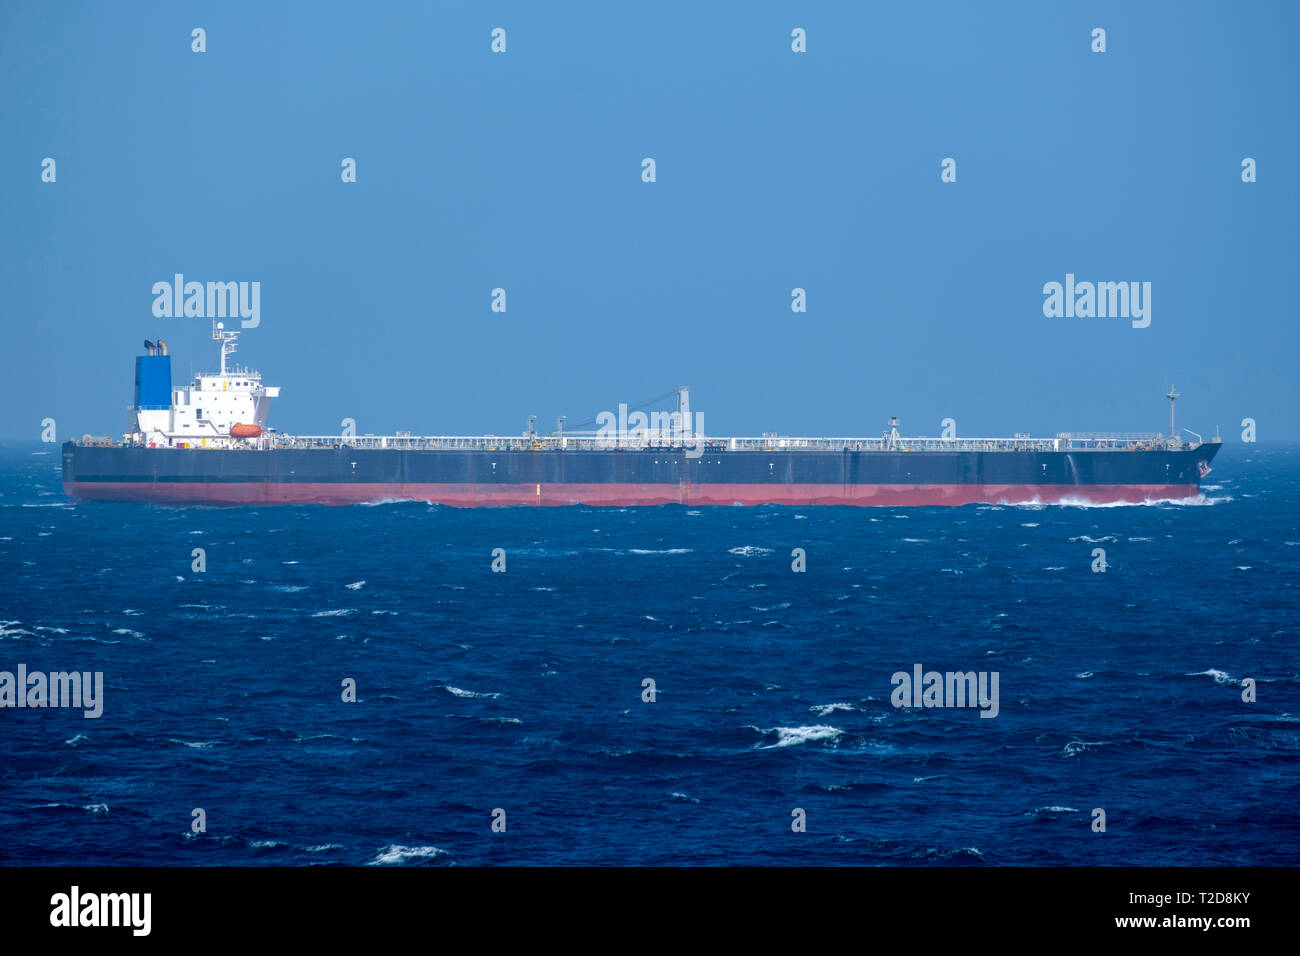 Oil tanker at sea Stock Photo